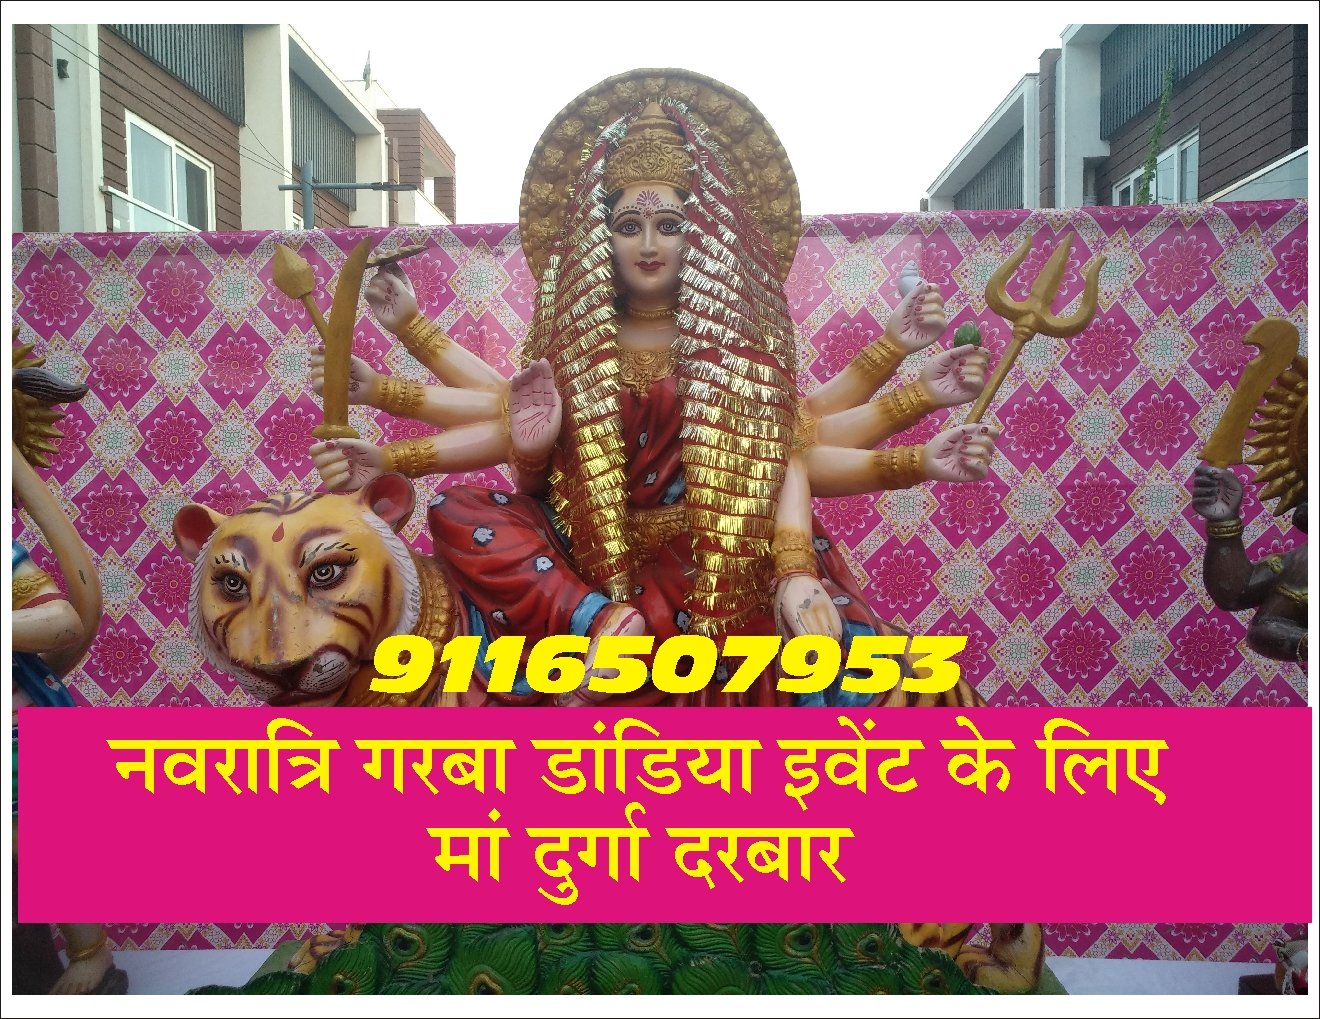 Ma Durga Pratima Darbar For Hire in Navratri Garba Dandiya Events Jaipur